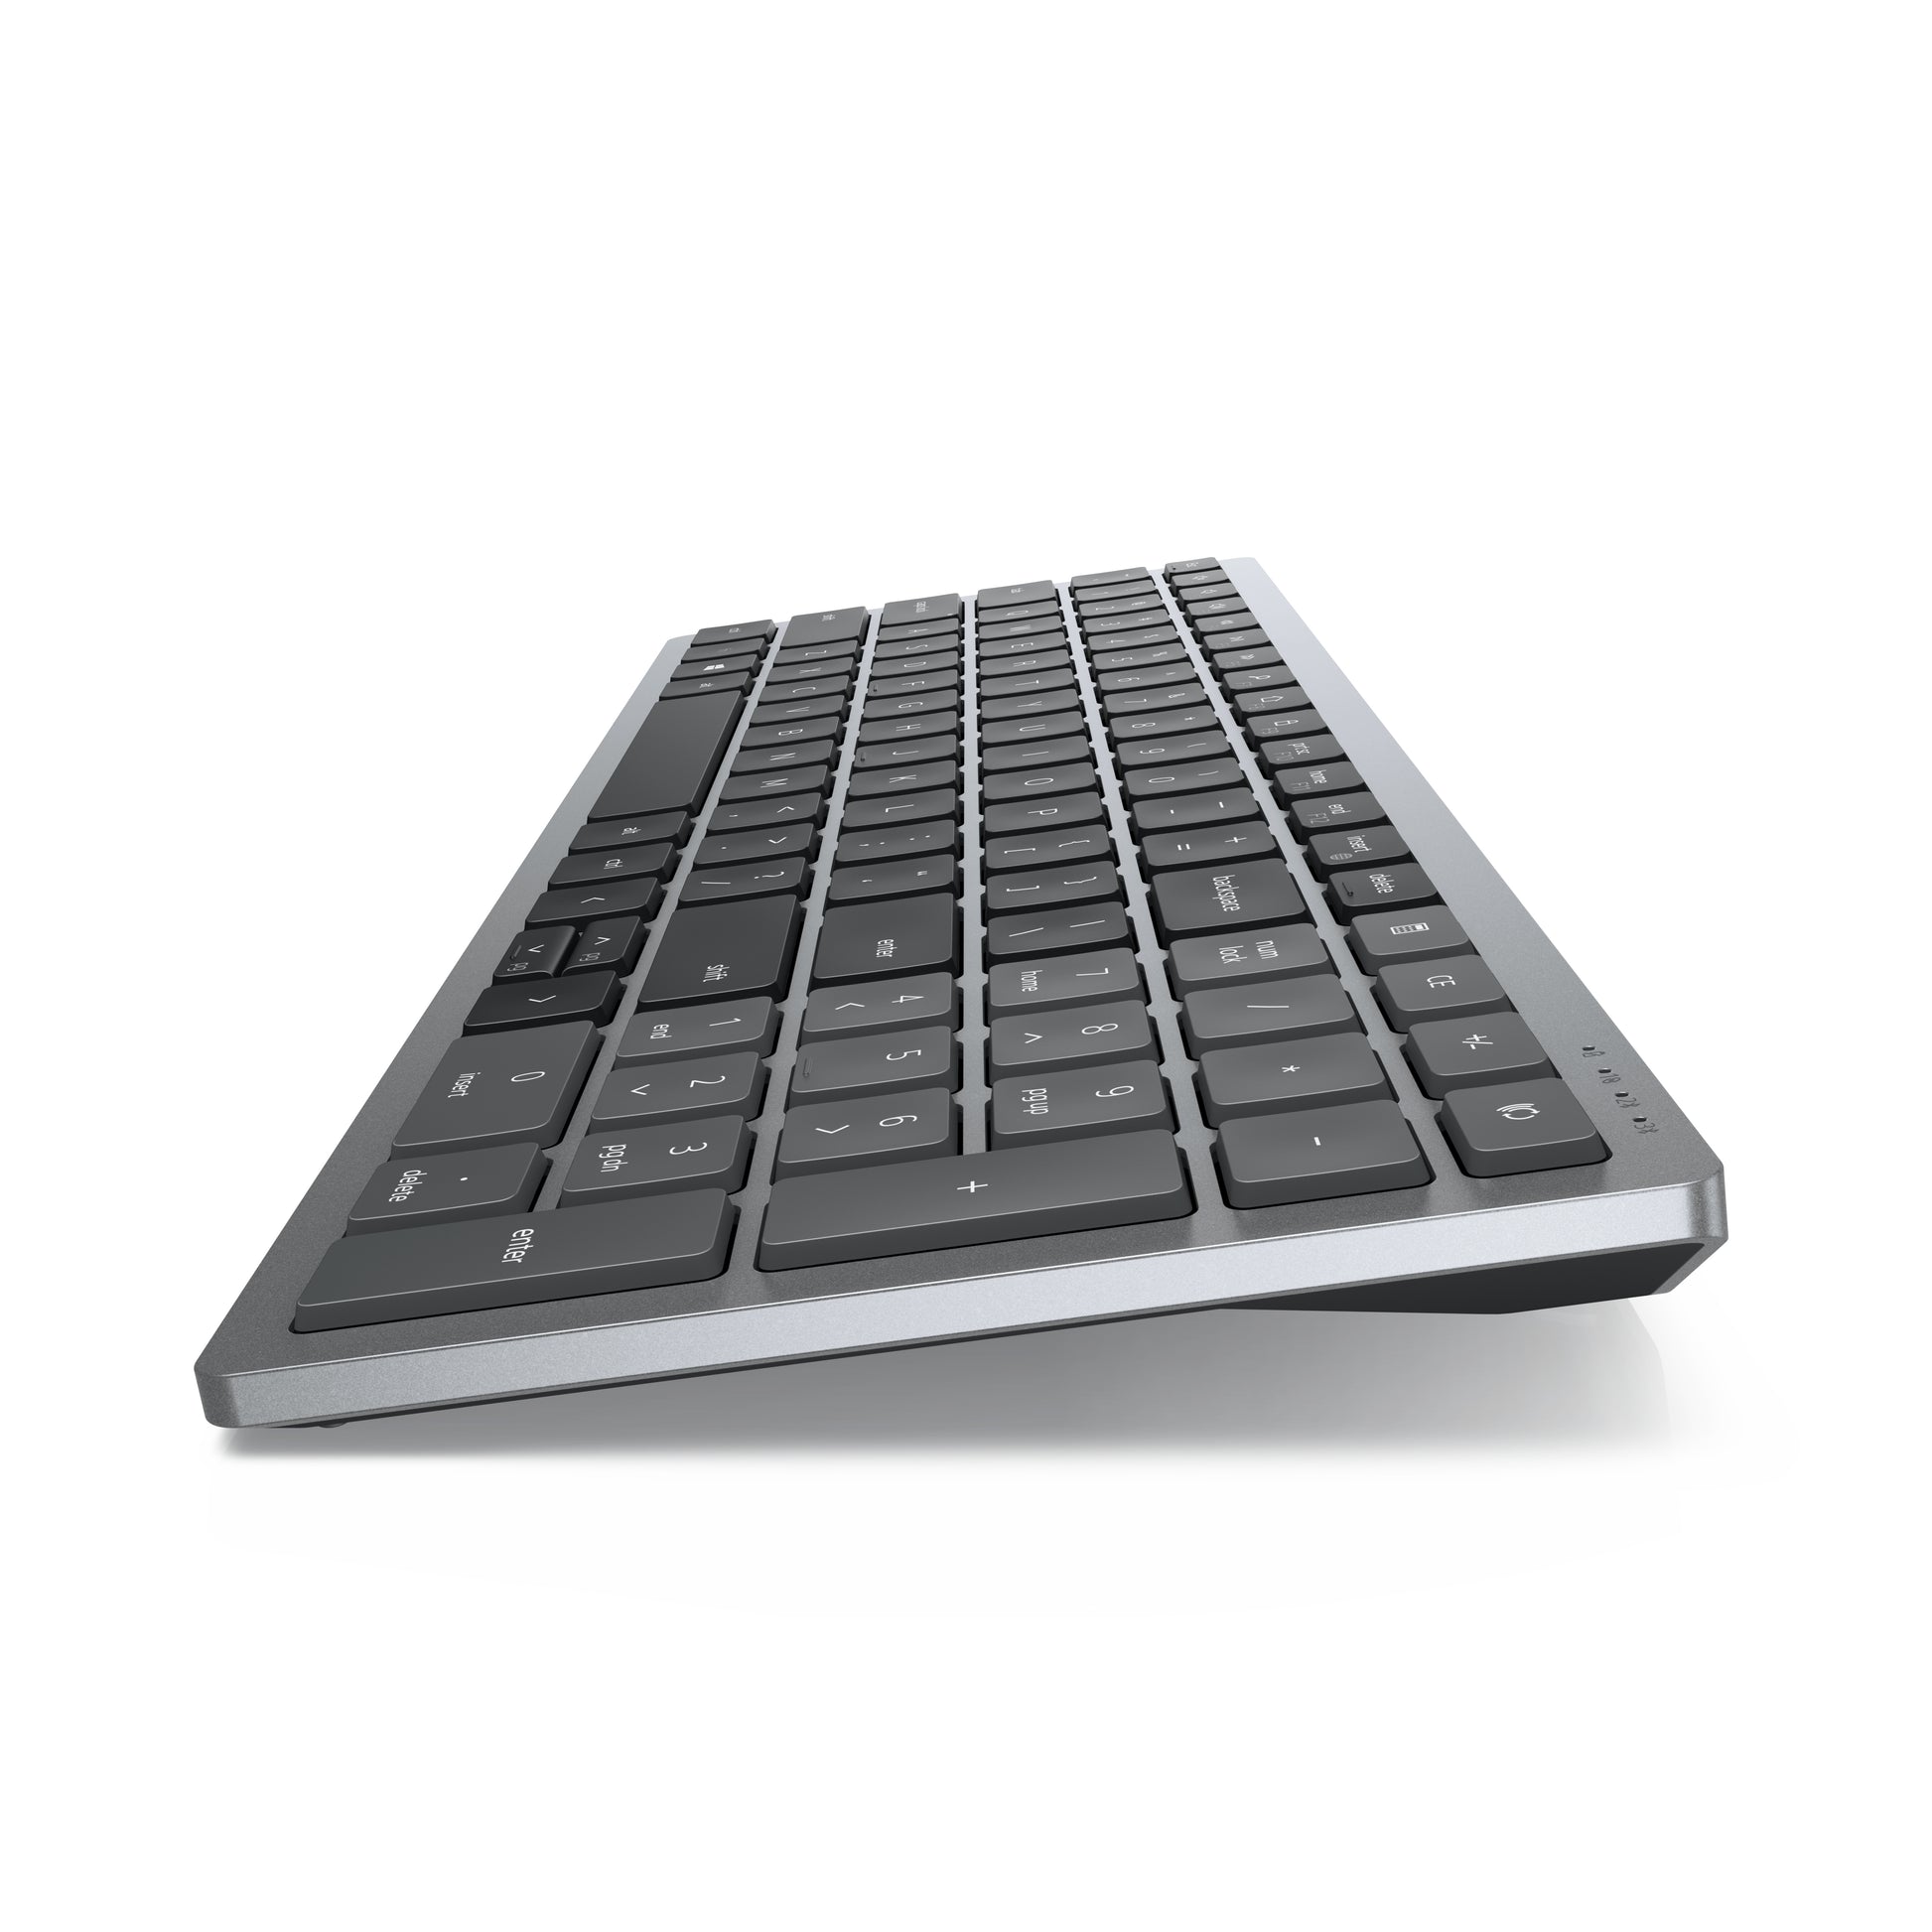 DELL KM7120W keyboard Mouse included RF Wireless + Bluetooth QWERTY US International Grey, Titanium-5